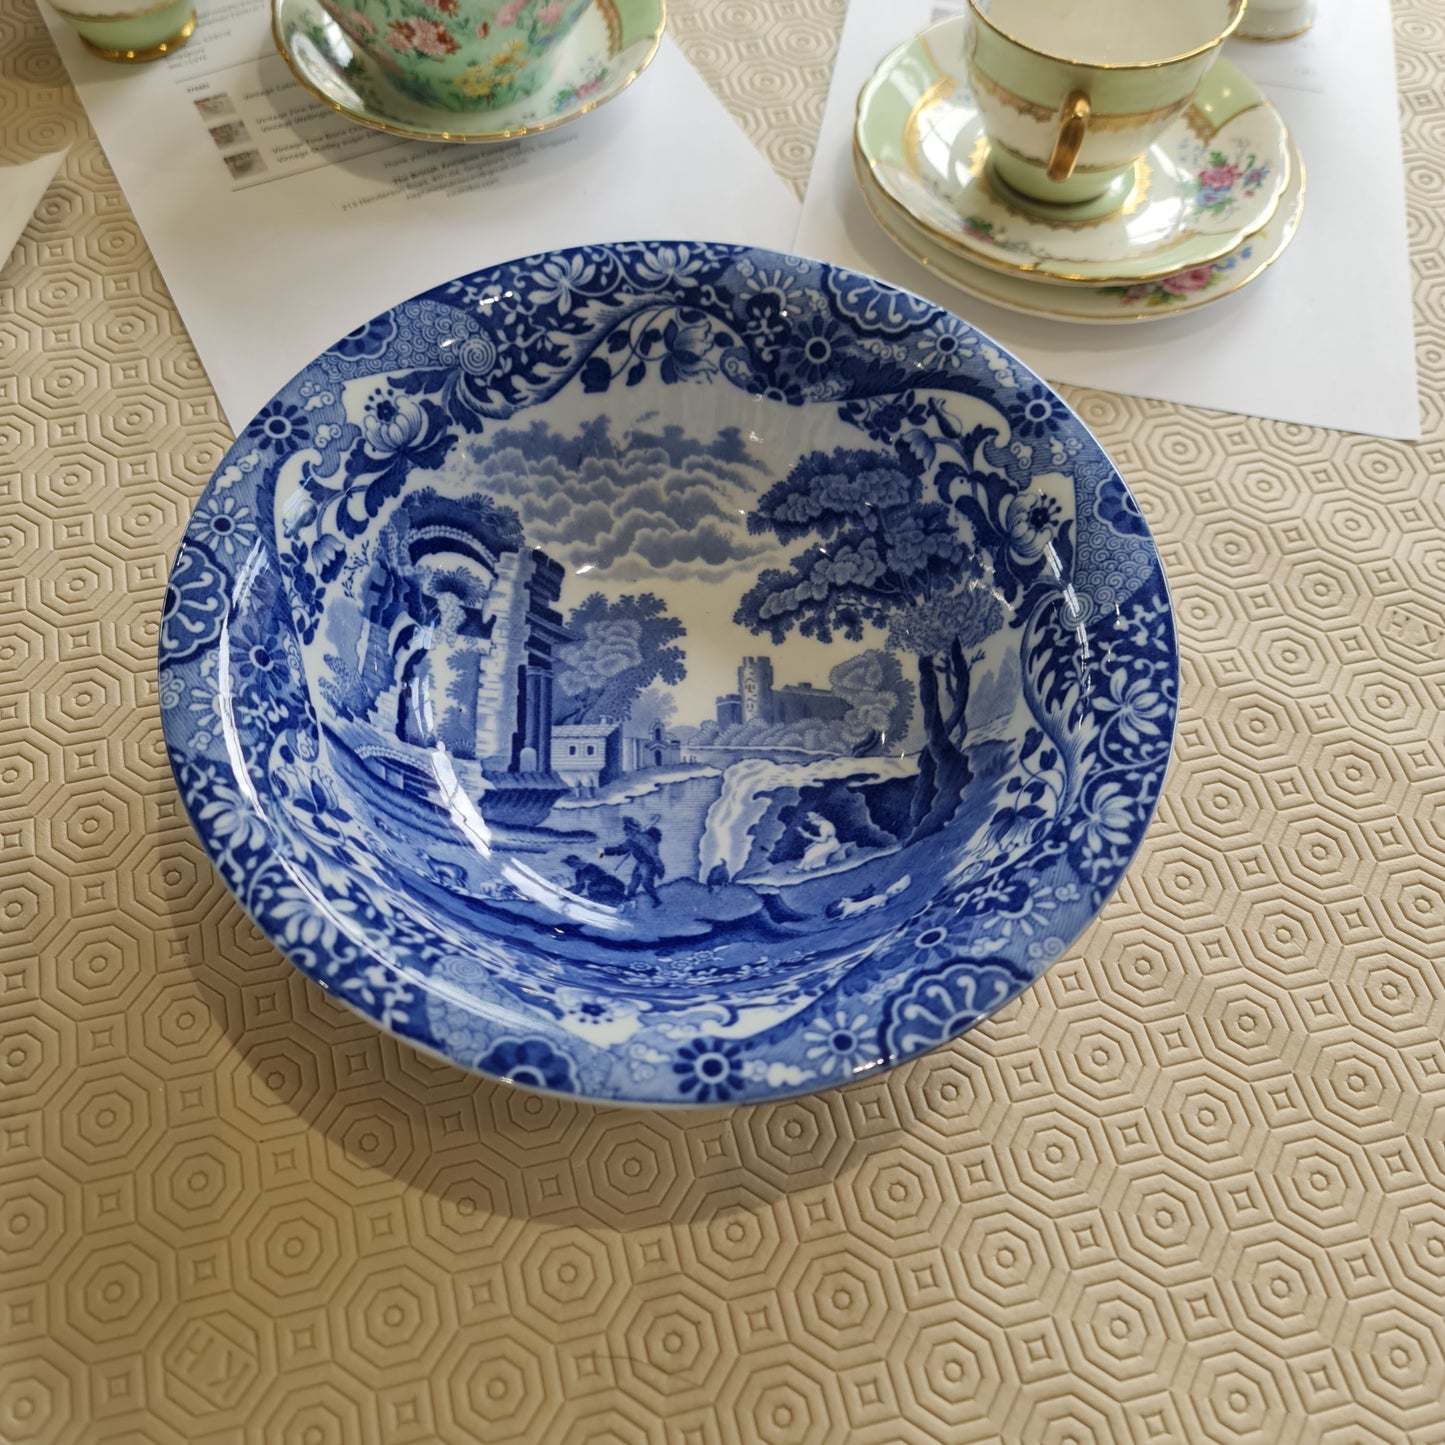 Copeland Spode blue & white transfer painted dish in the "Italian" pattern- minor nip on edge